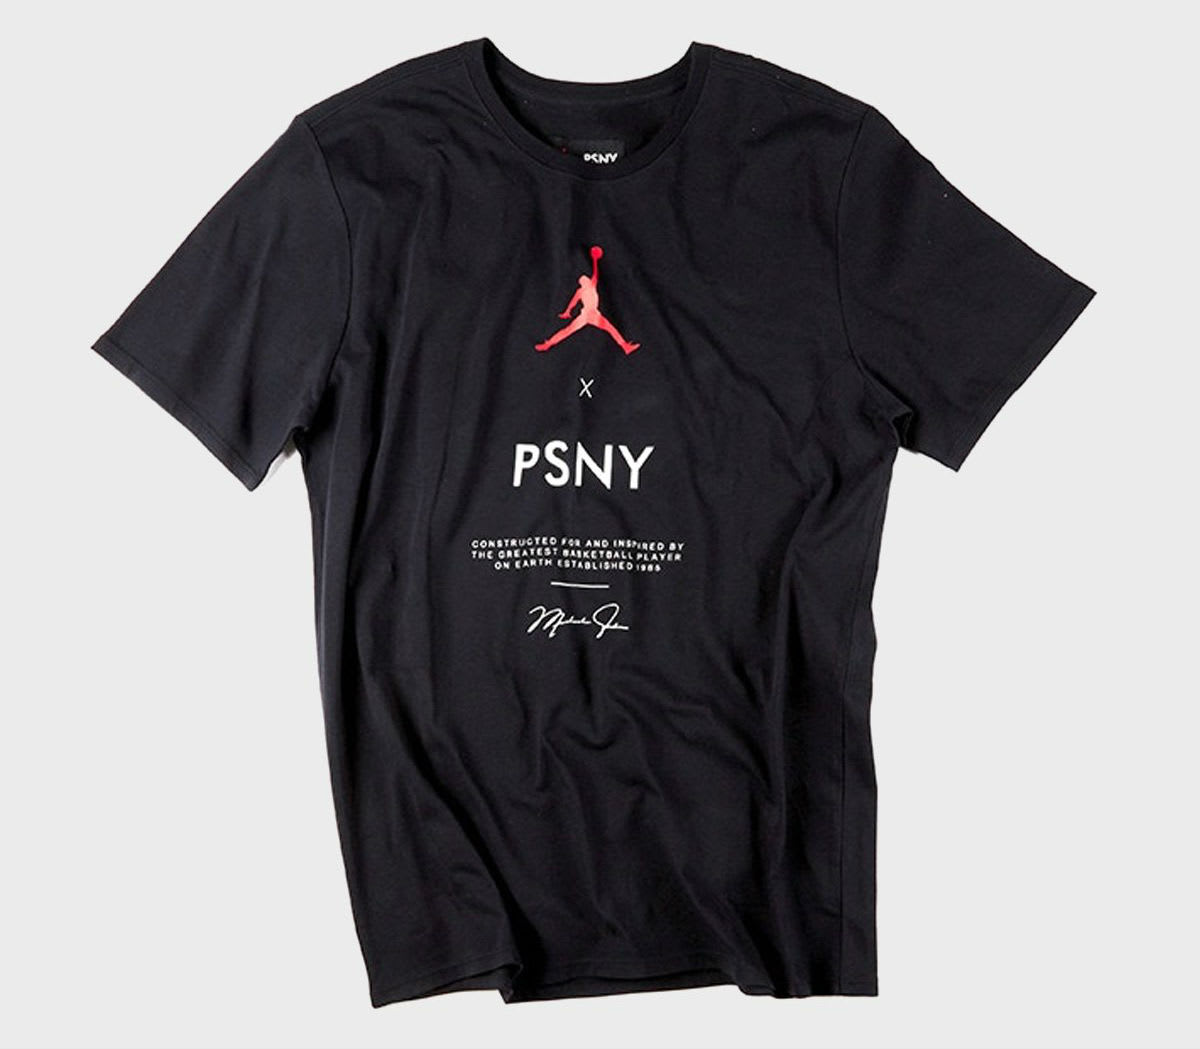 PSNY x Air Jordan 15 Black Shirt Release Date